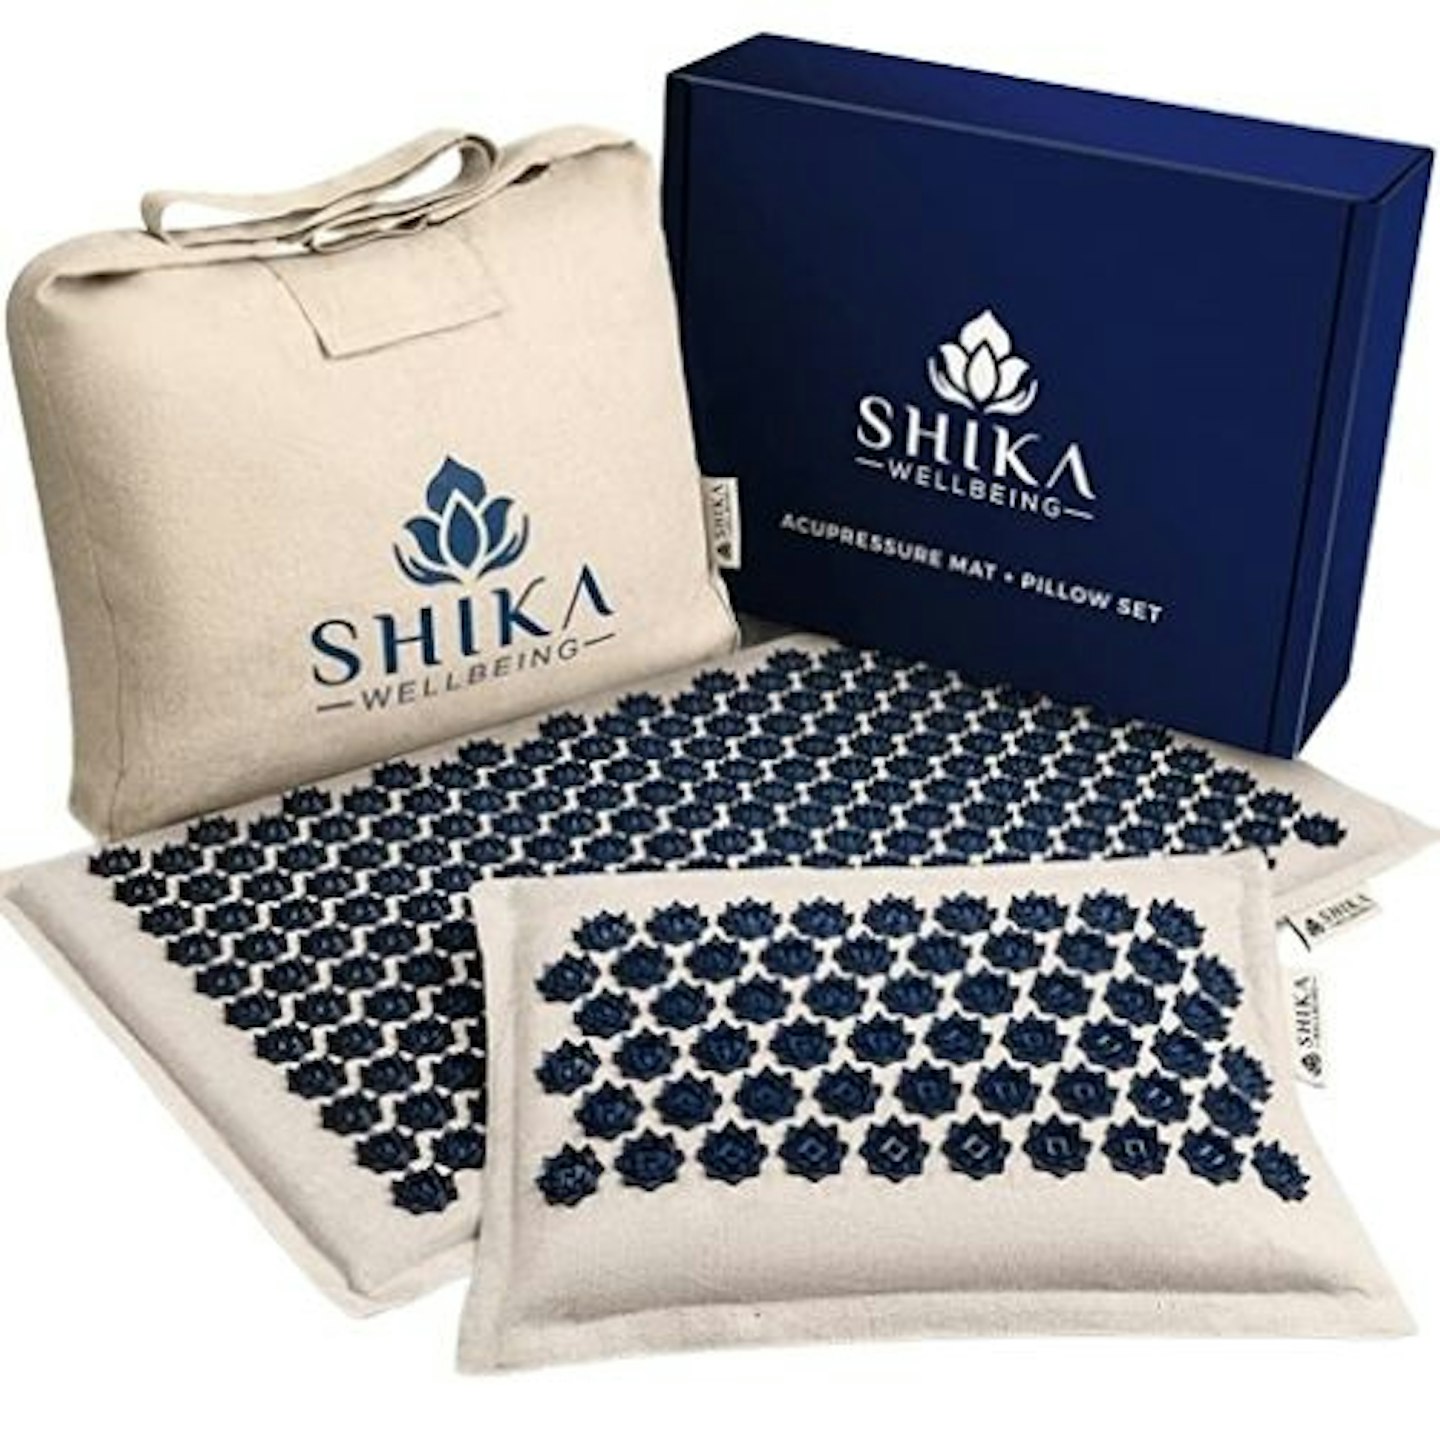 Shika Wellbeing Acupressure Mat & Pillow Set